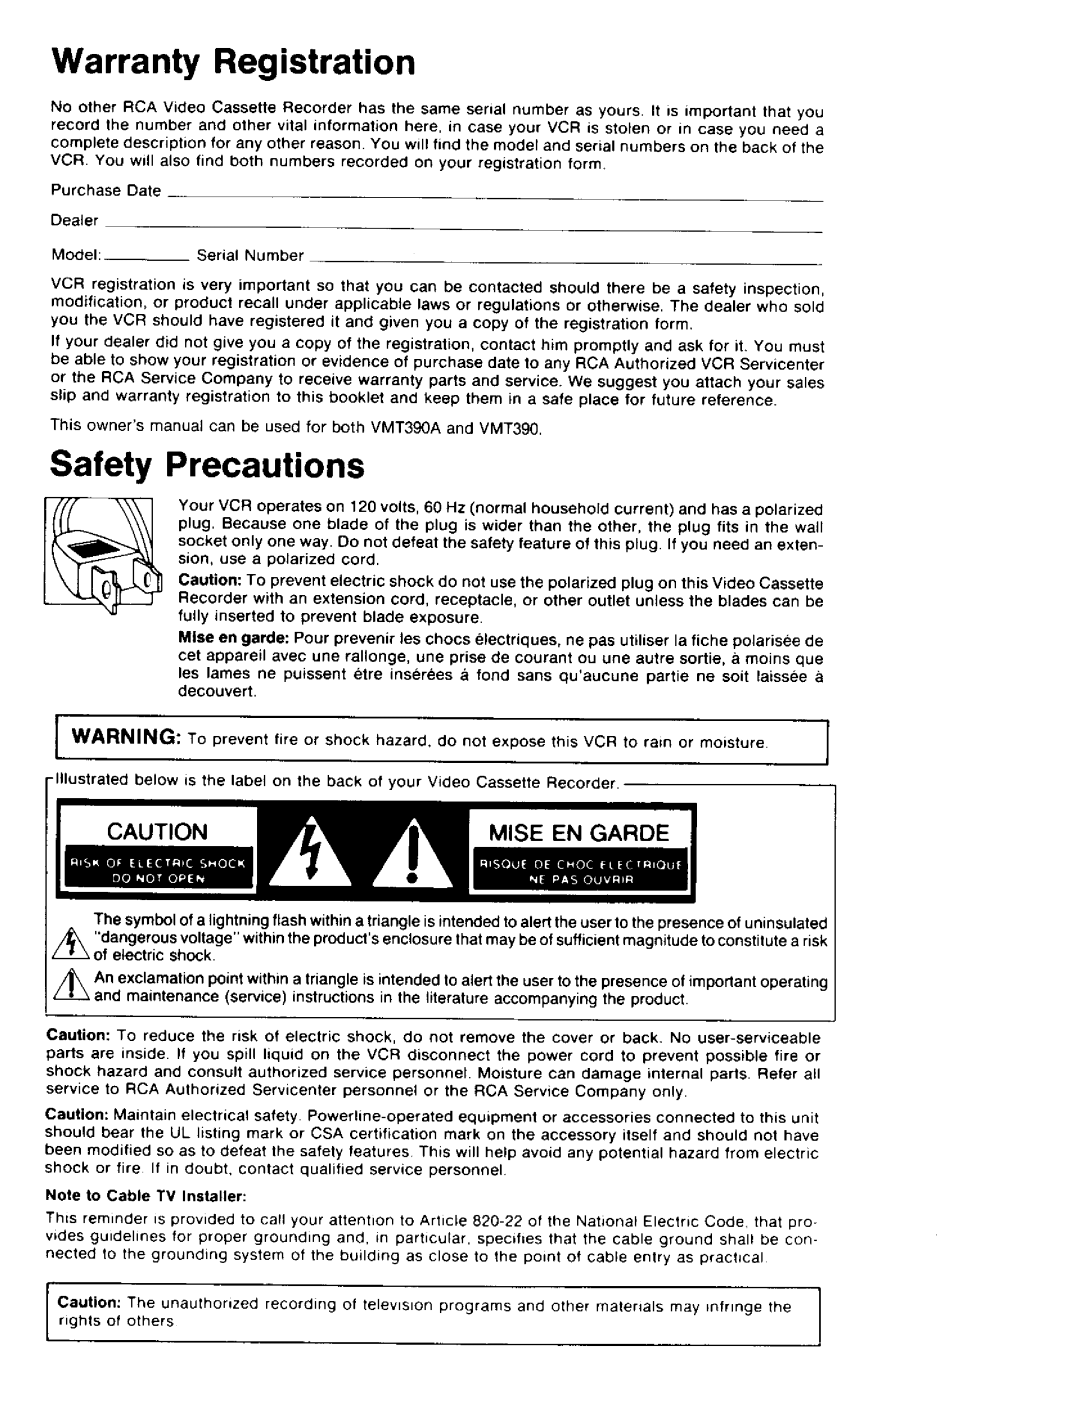 RCA 390 owner manual Warranty Registration, Safety Precautions, Mise En Garde 